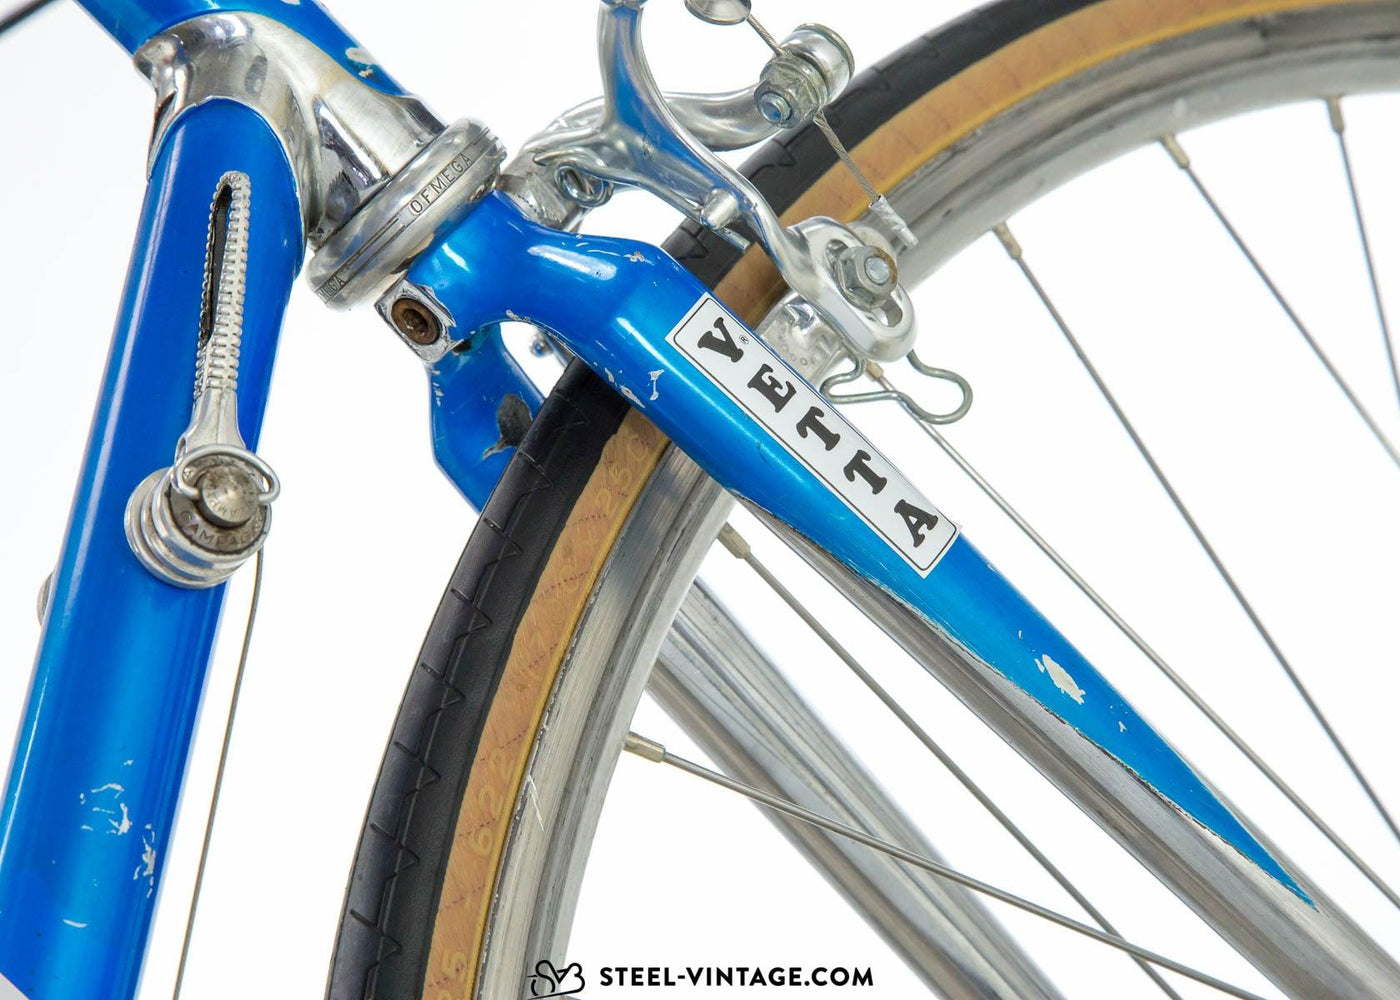 Vetta Donna Classic Ladies Bike 1980s - Steel Vintage Bikes